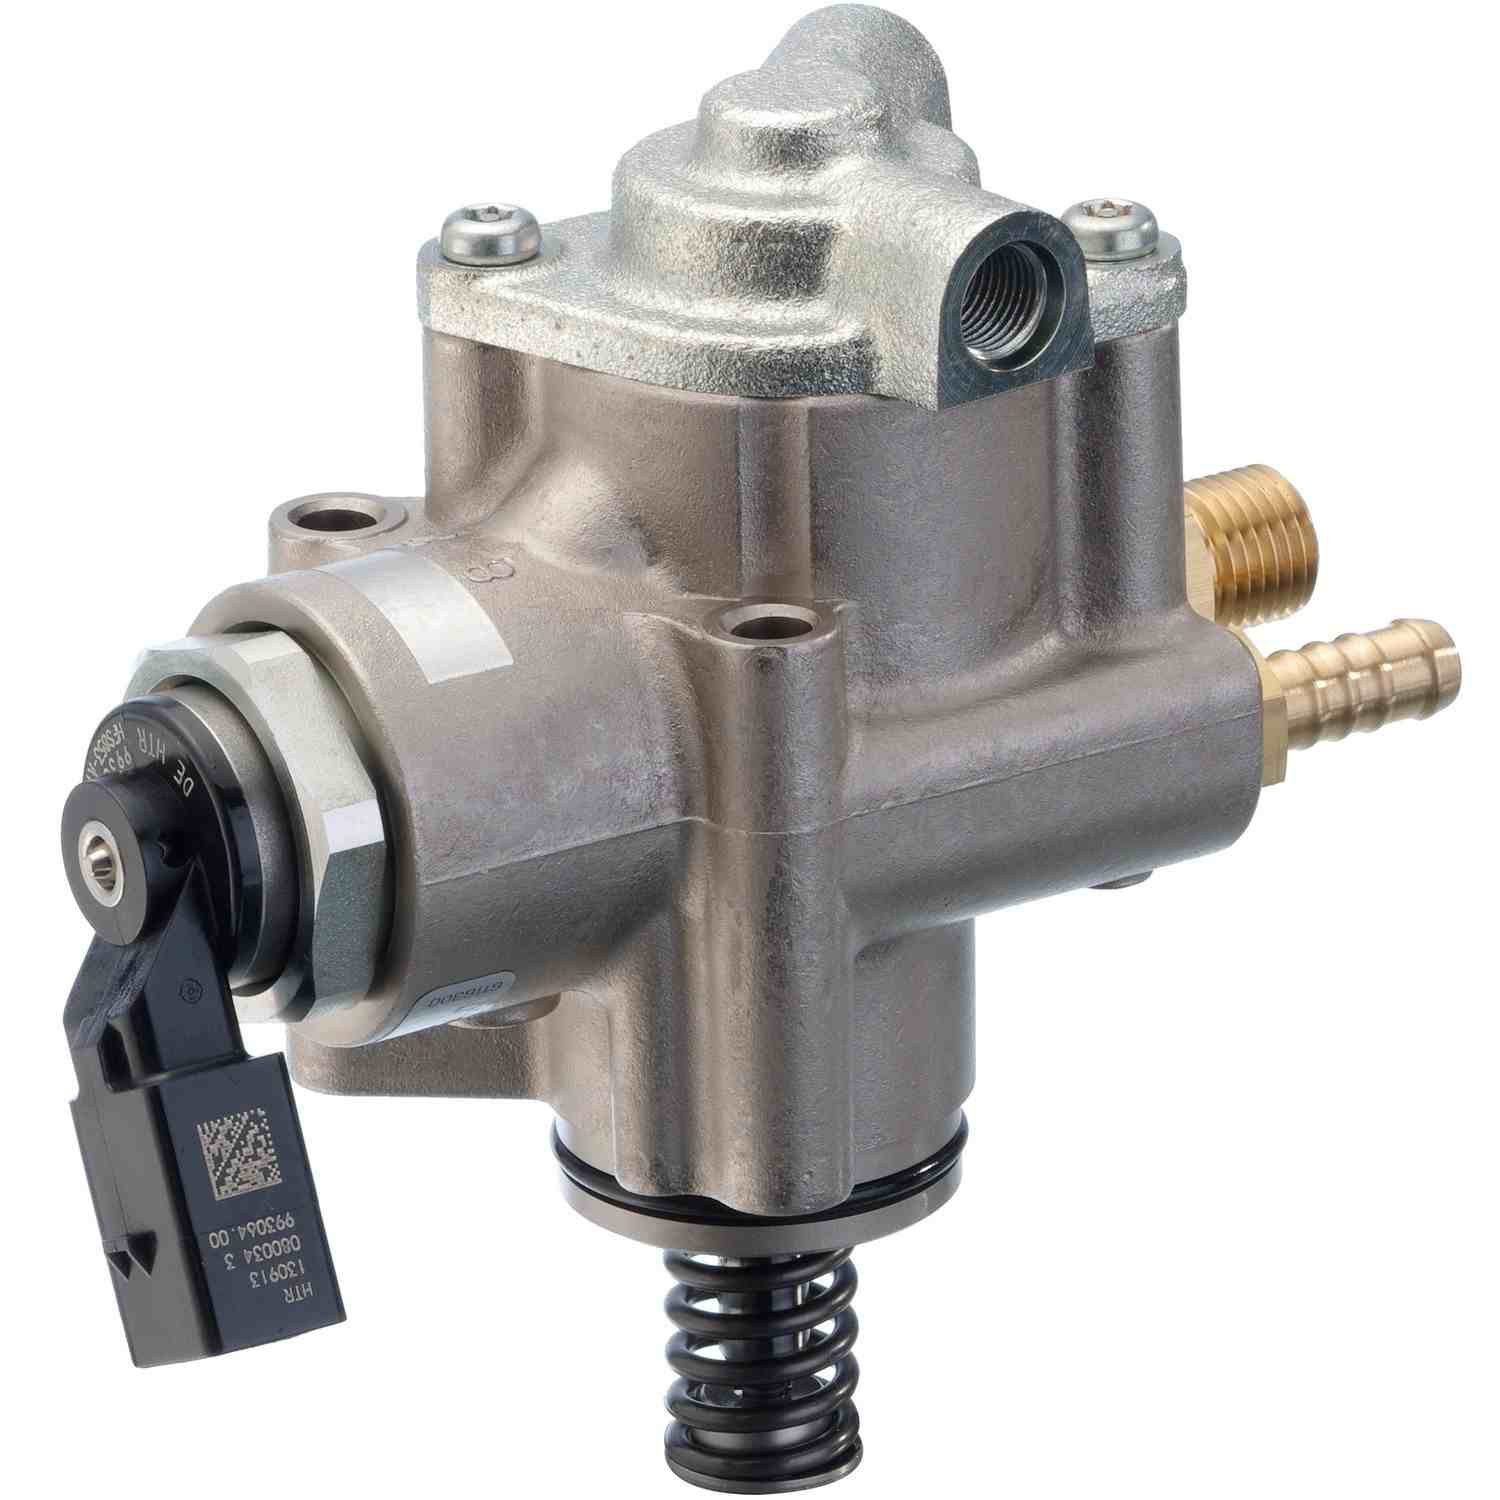 Pierburg Direct Injection High Pressure Fuel Pump 7.06032.04.0